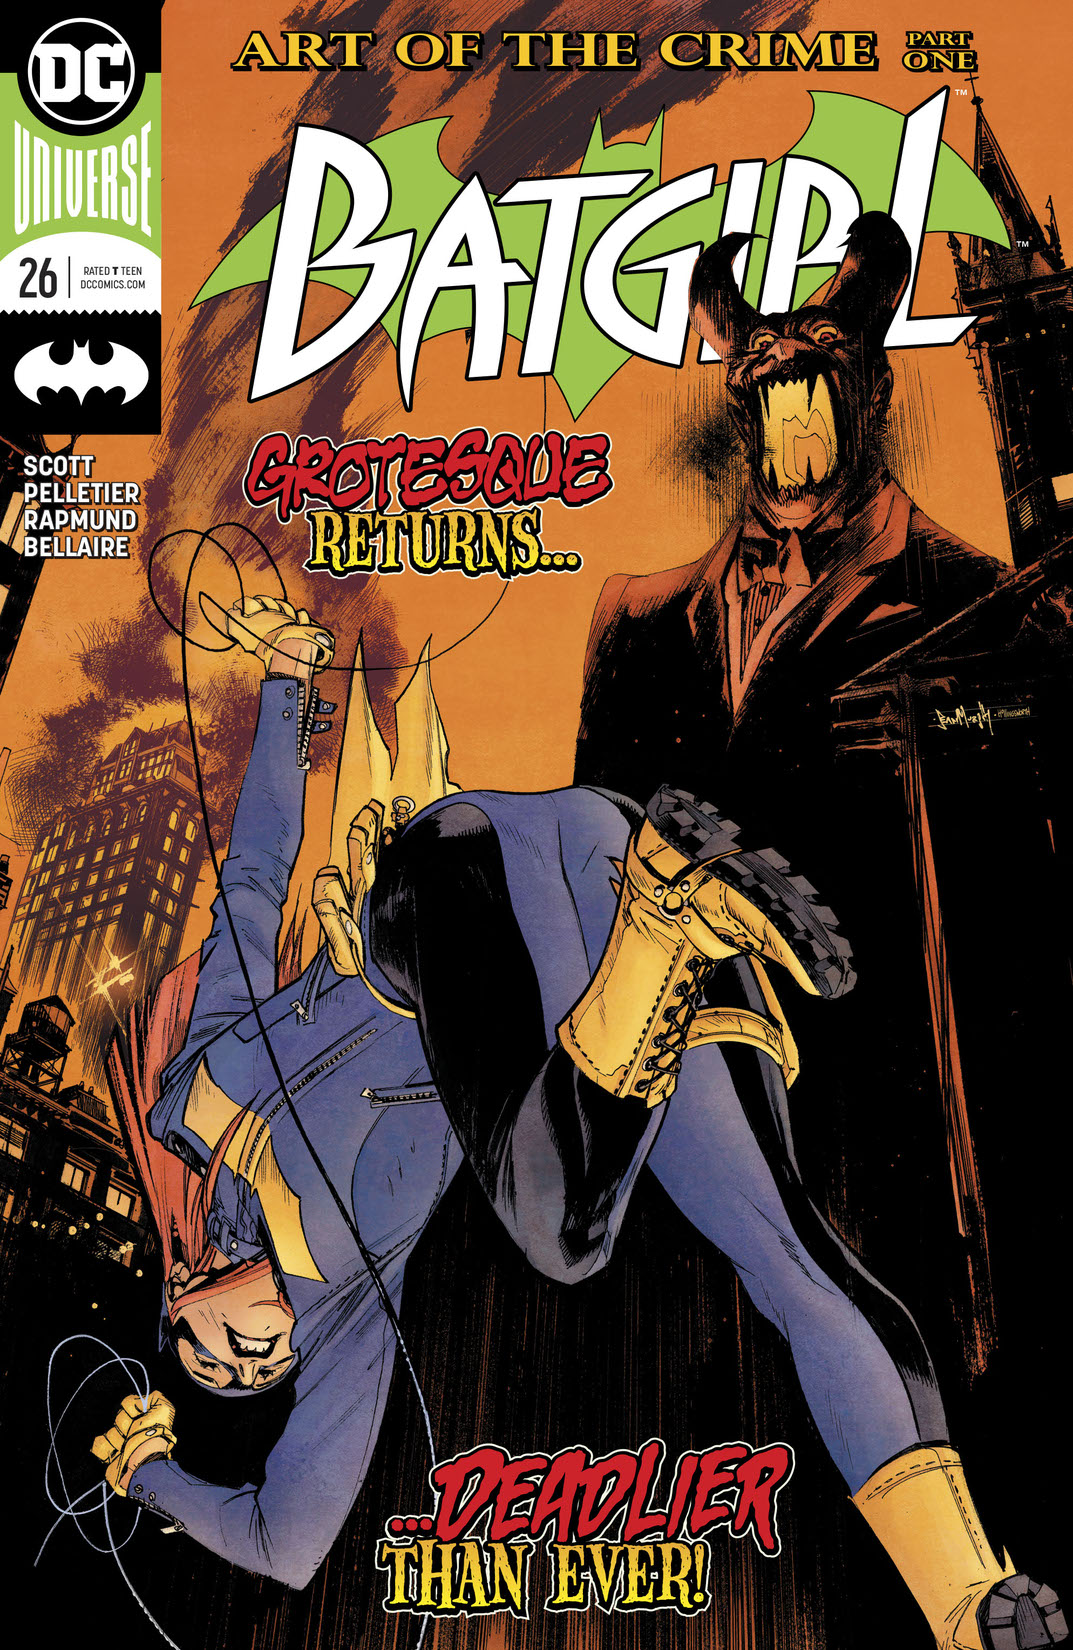 Batgirl (2016-) #26 preview images